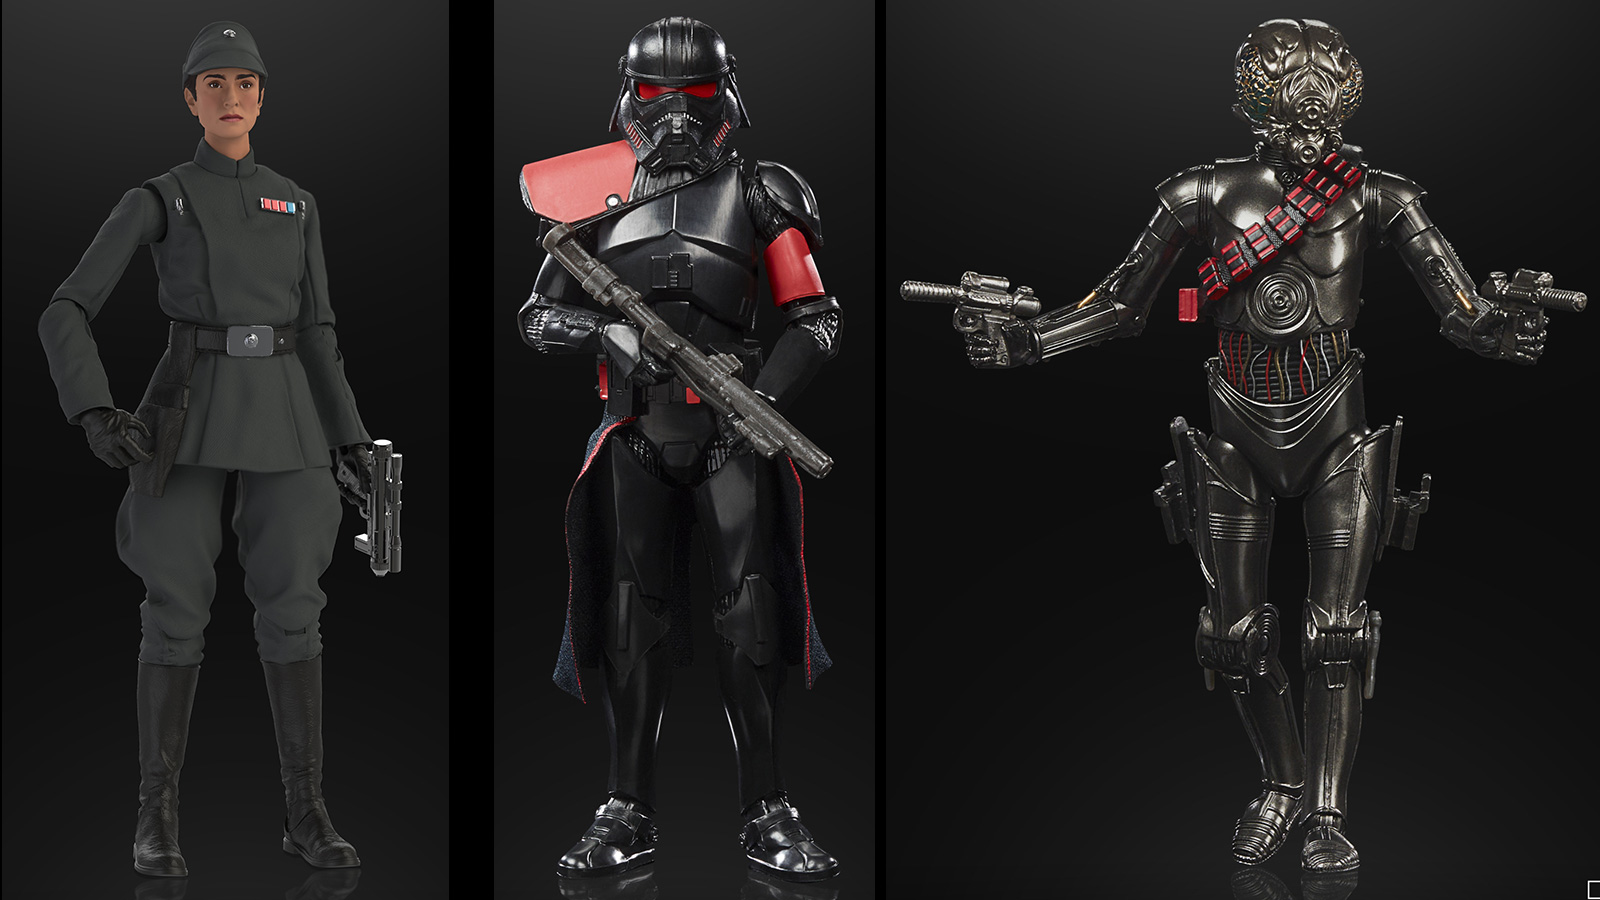 Disney Press Release - TBS 6-Inch Tala, Walmart Exclusive 1-JAC And Purge Trooper (Phase II Armor) Figures